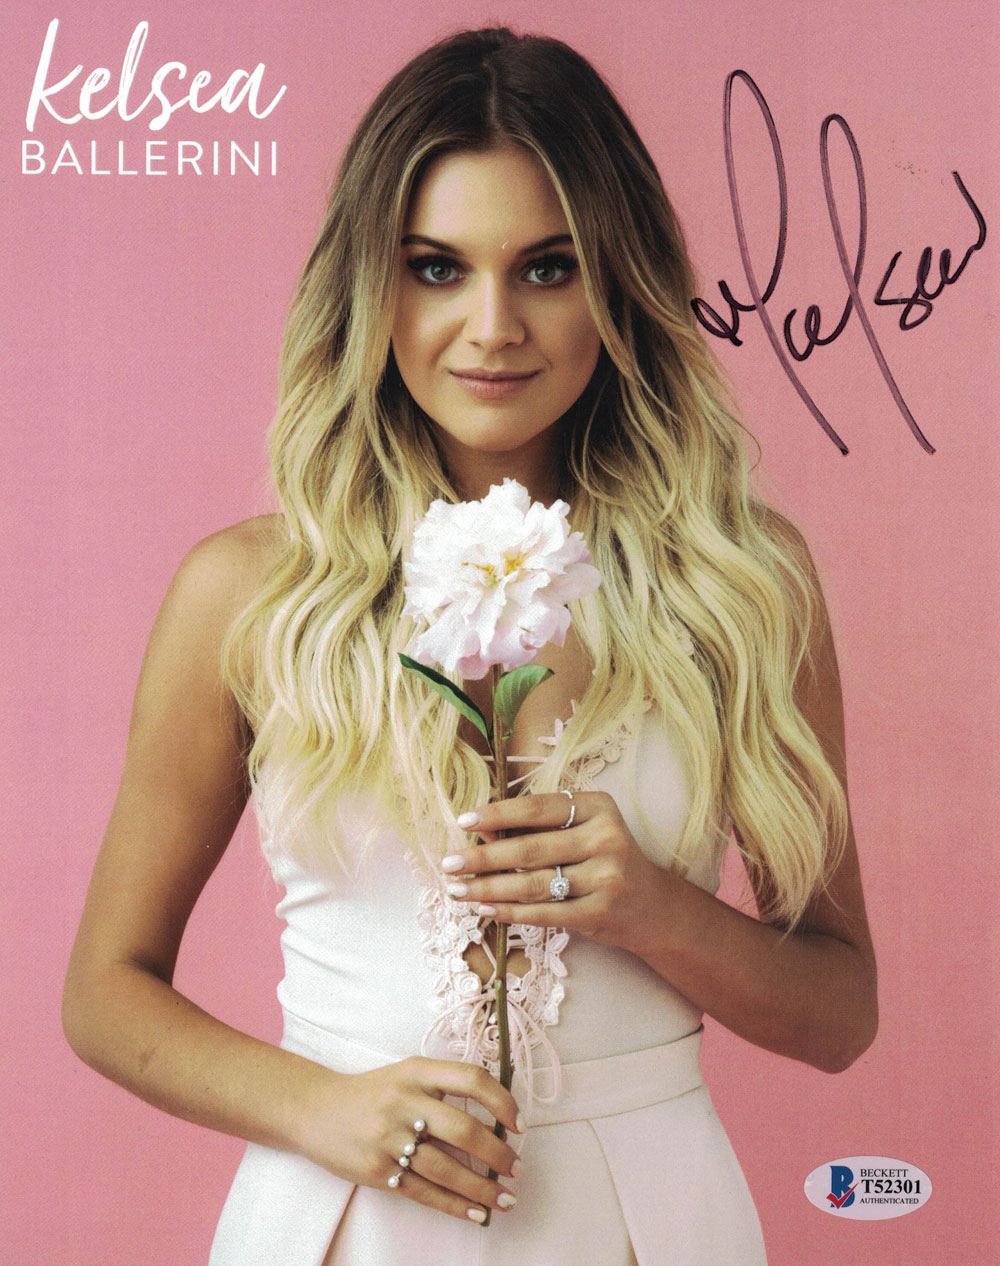 Kelsea Ballerini Autographed/Signed 8x10 Photo BAS 27295